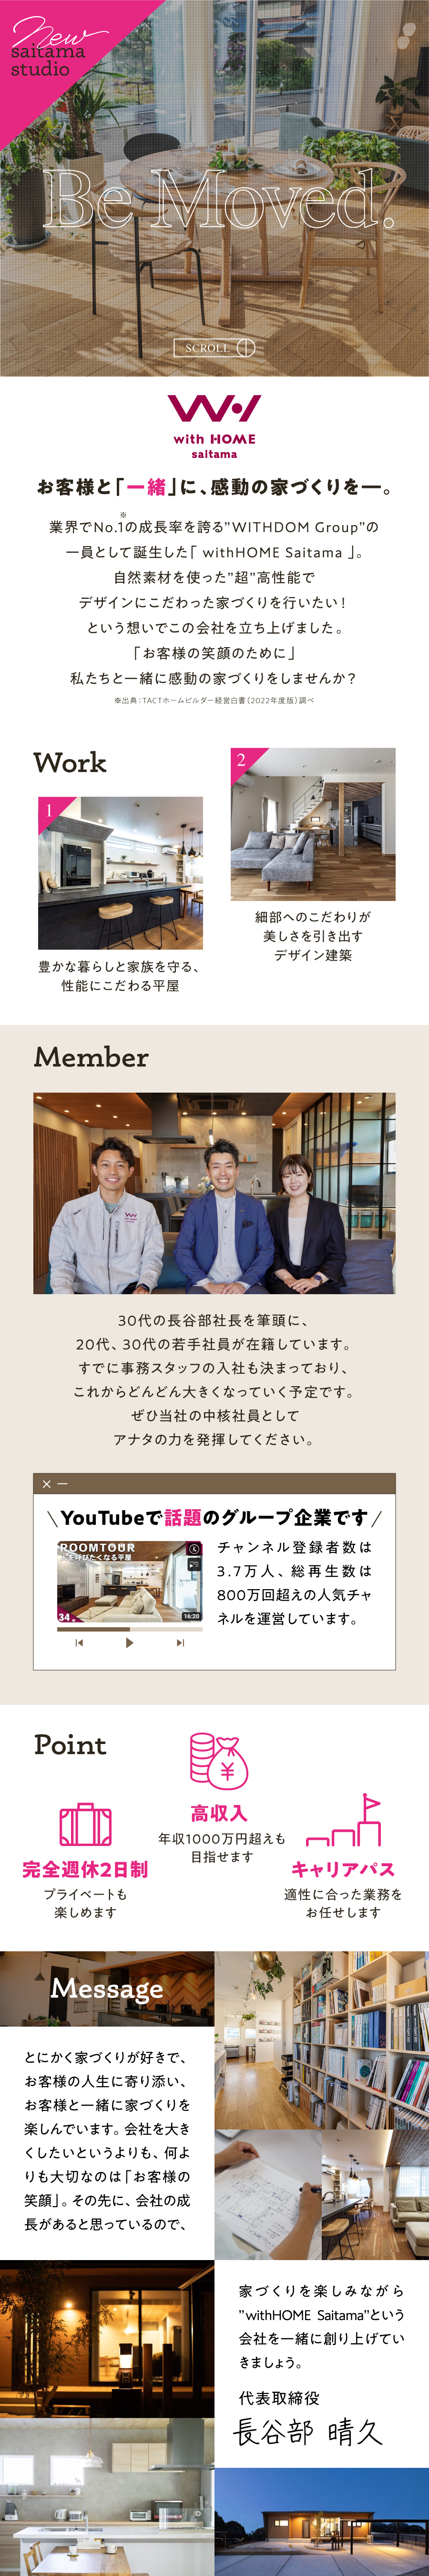 withHOME Saitama株式会社からのメッセージ